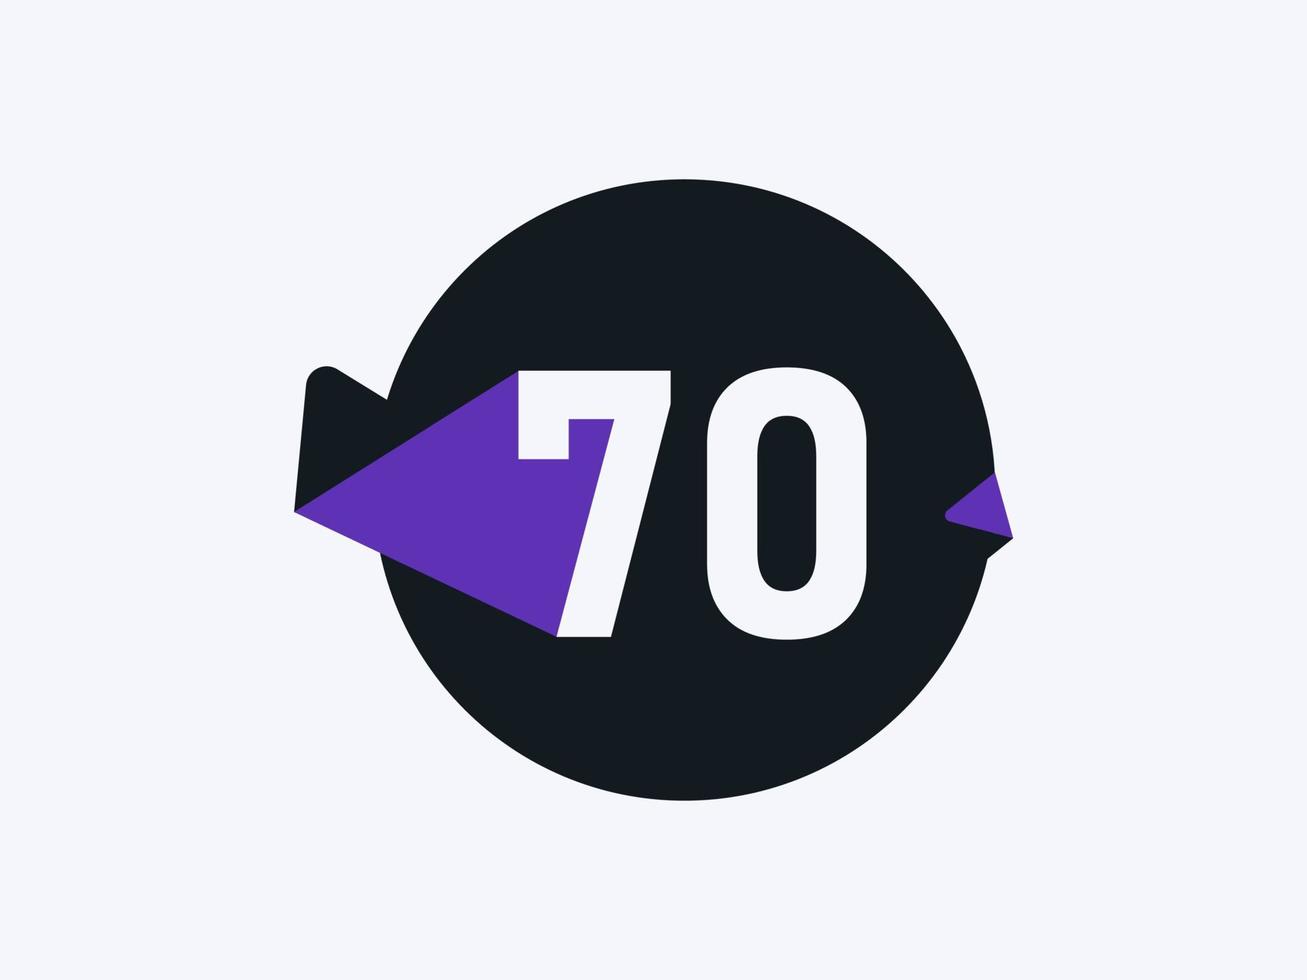 70 Number logo icon design vector image. Number logo icon design vector image